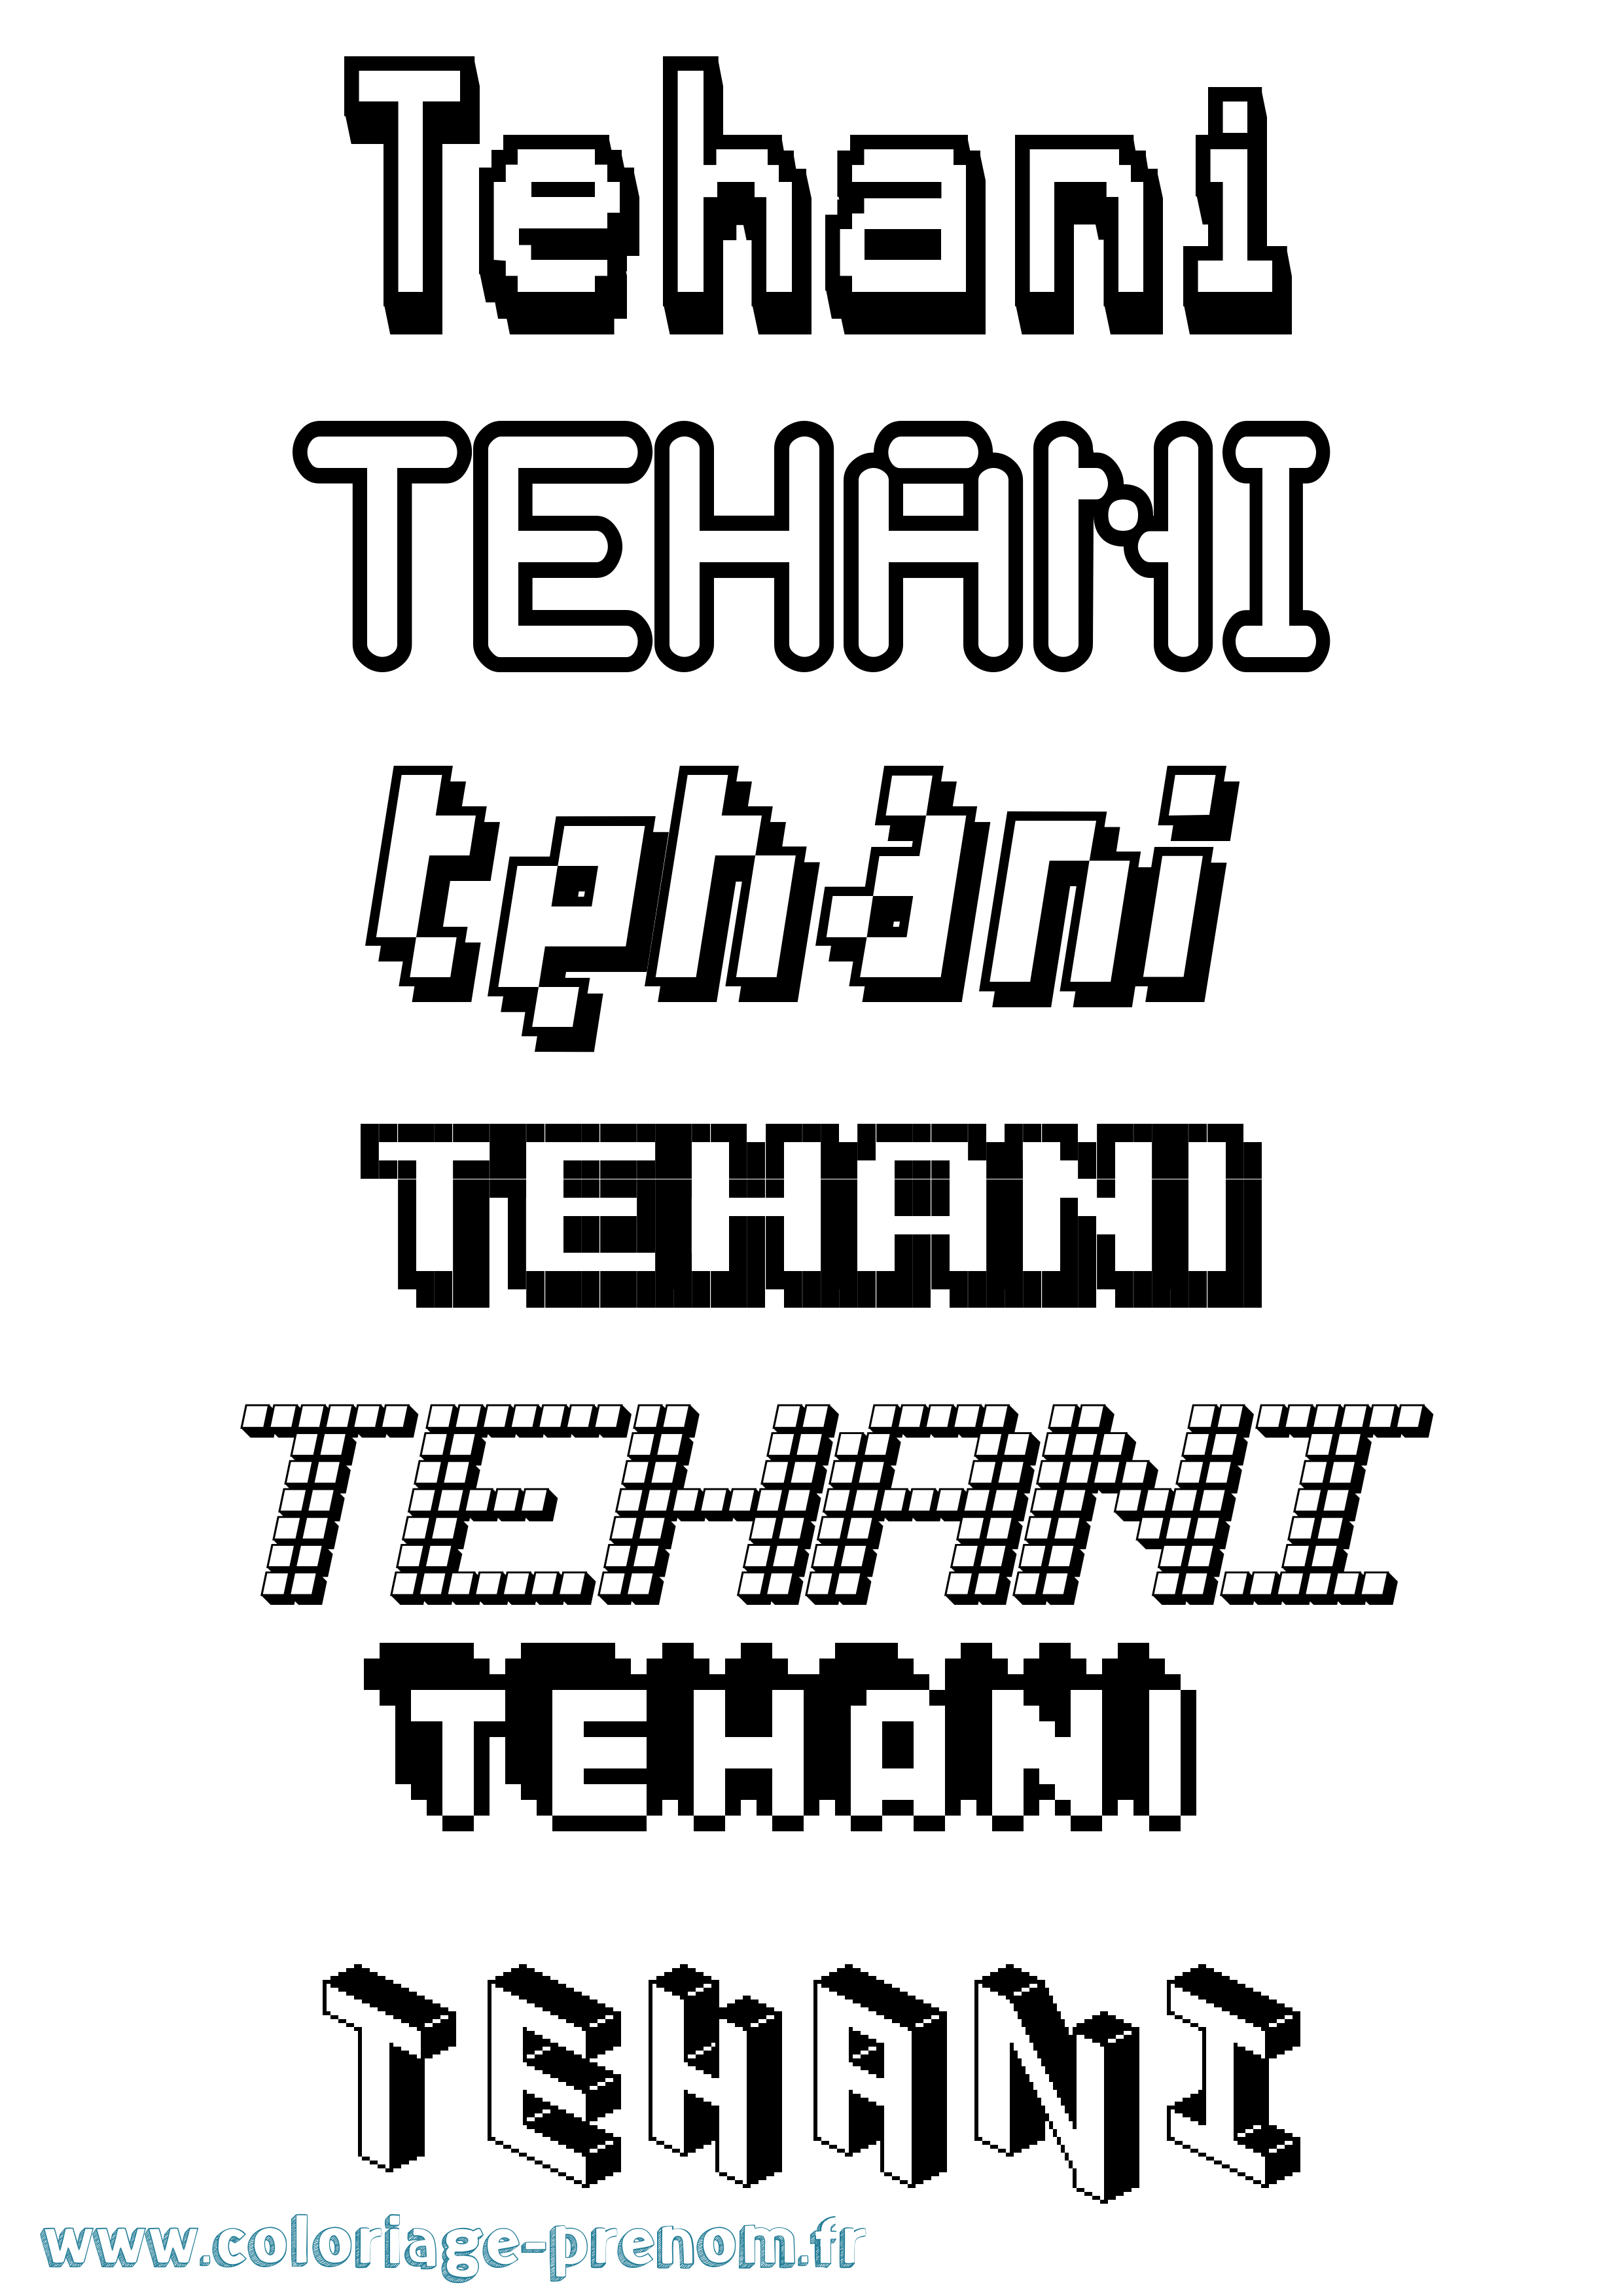 Coloriage prénom Tehani Pixel